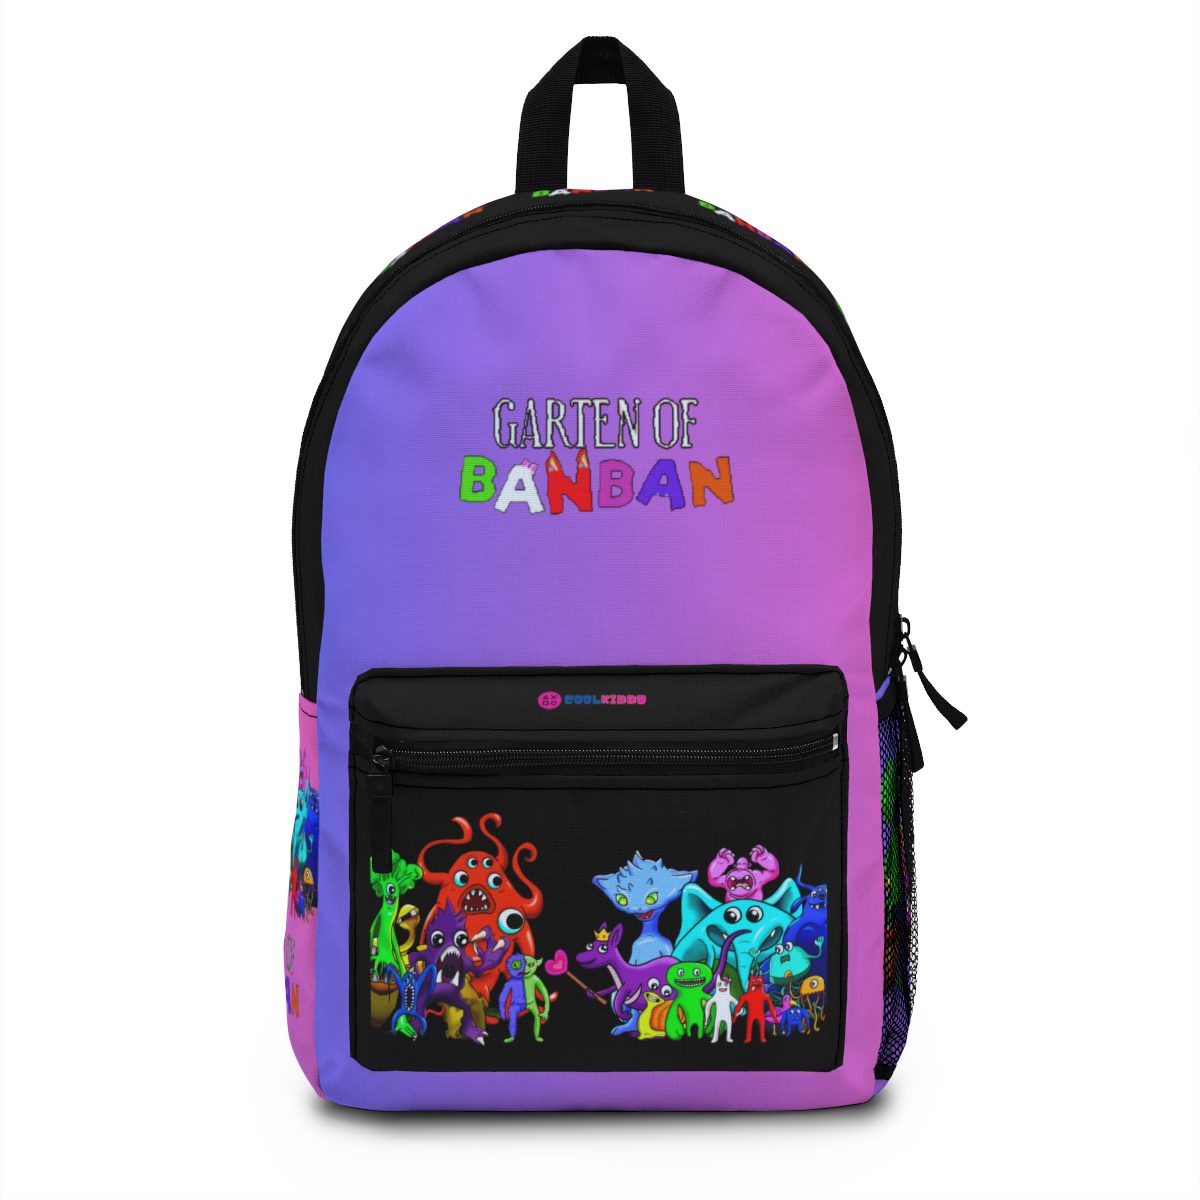 Garten of BanBan, Black and Purple Backpack Cool Kiddo 10